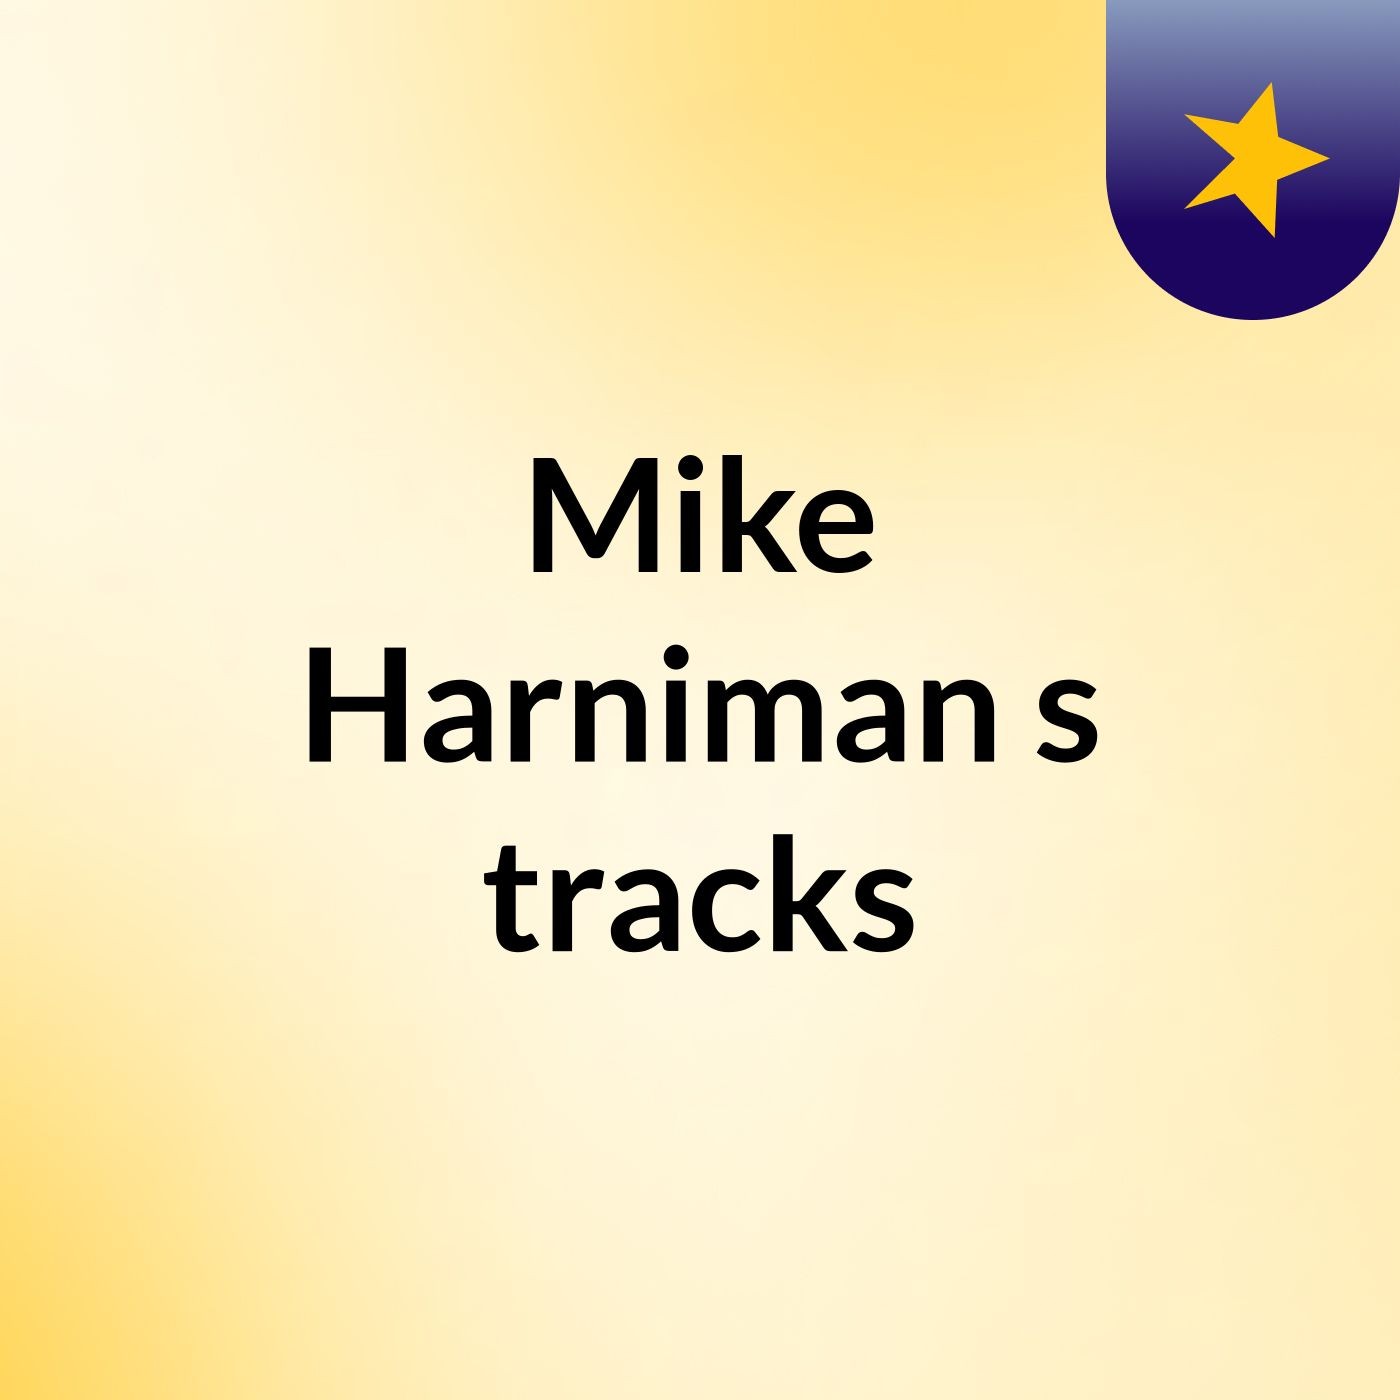 Mike Harniman's tracks